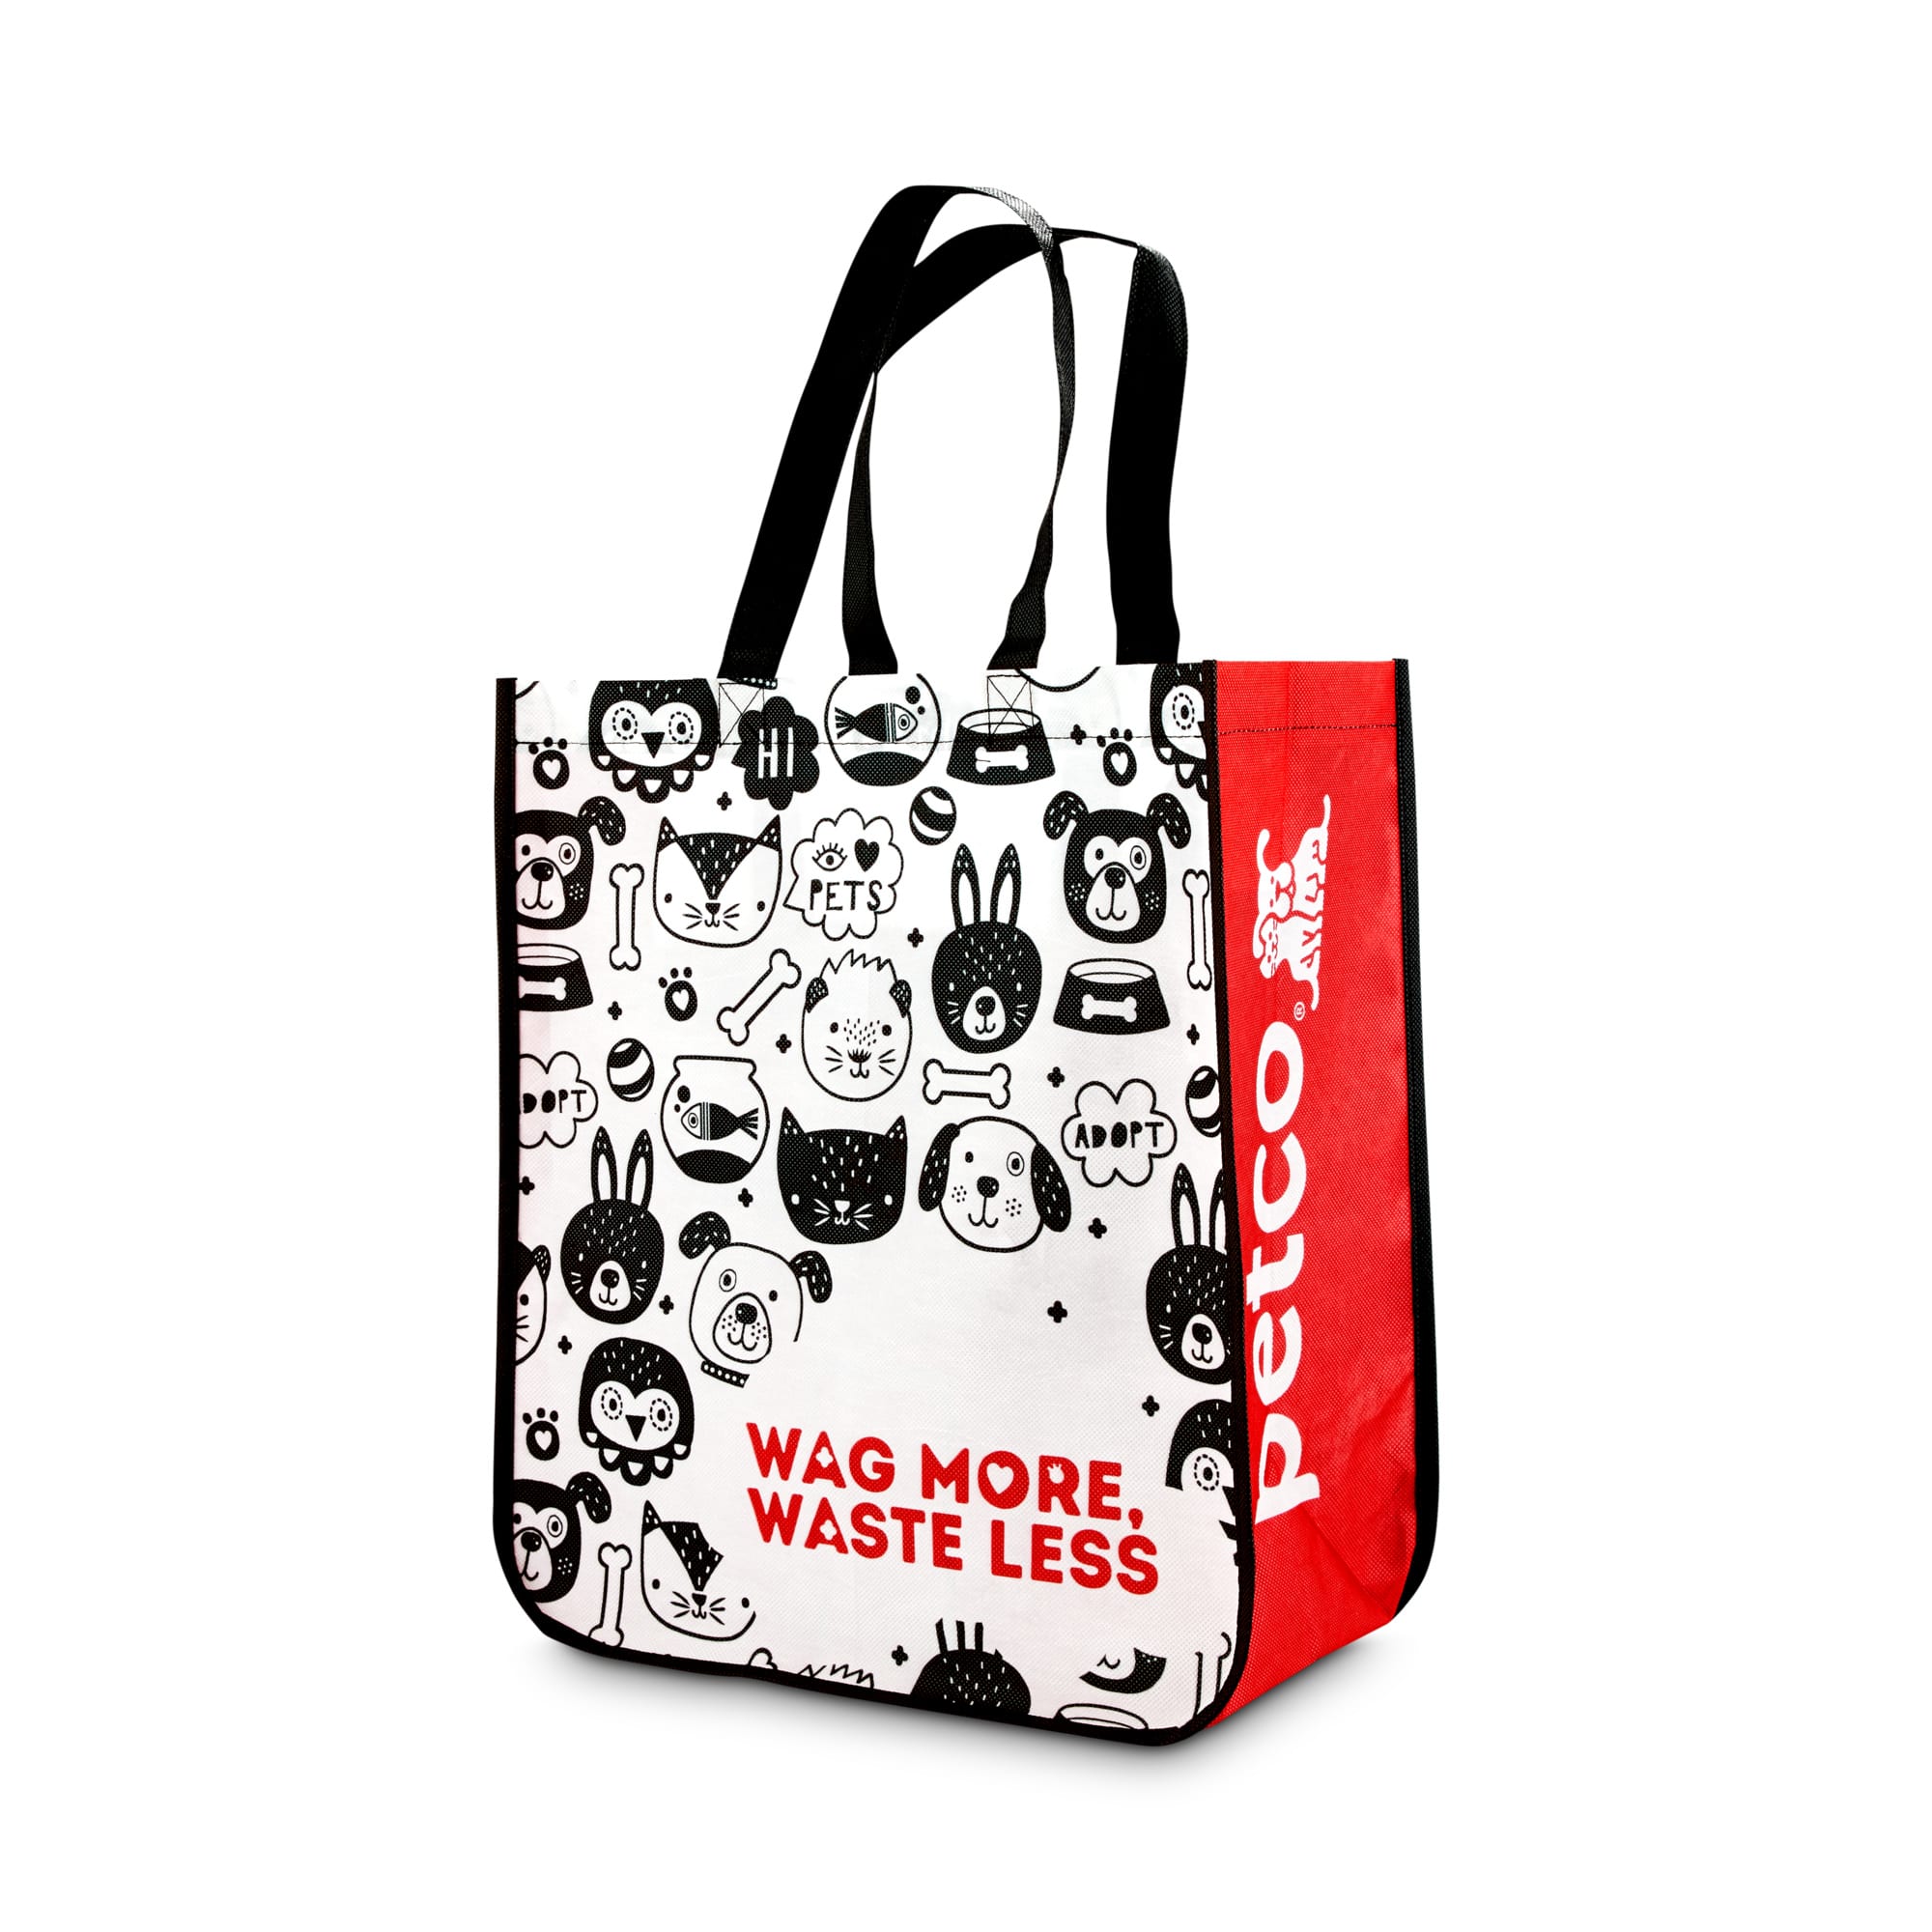 Doodle Print Tote Bag Reusable Shopping Bag Cotton Bag